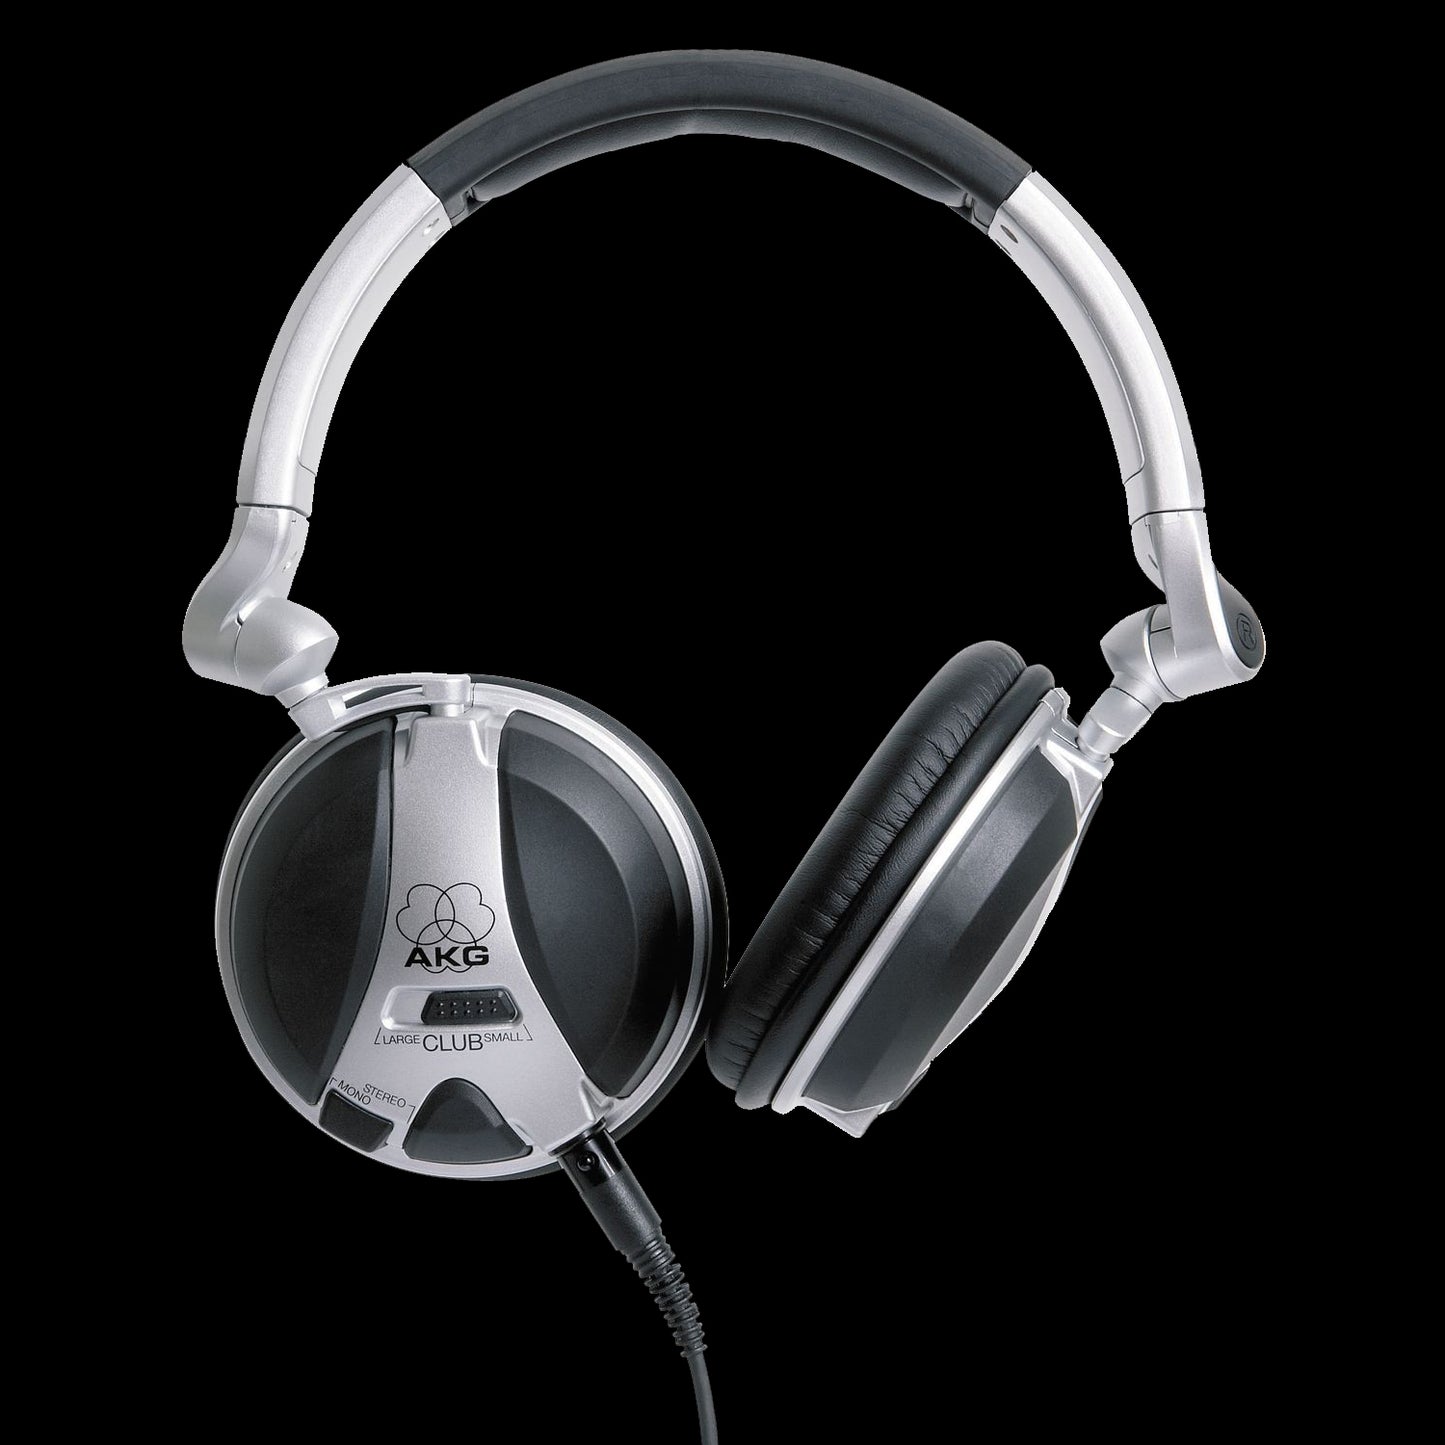 AKG K 181 DJ Professional Closed-Back DJ Headphones